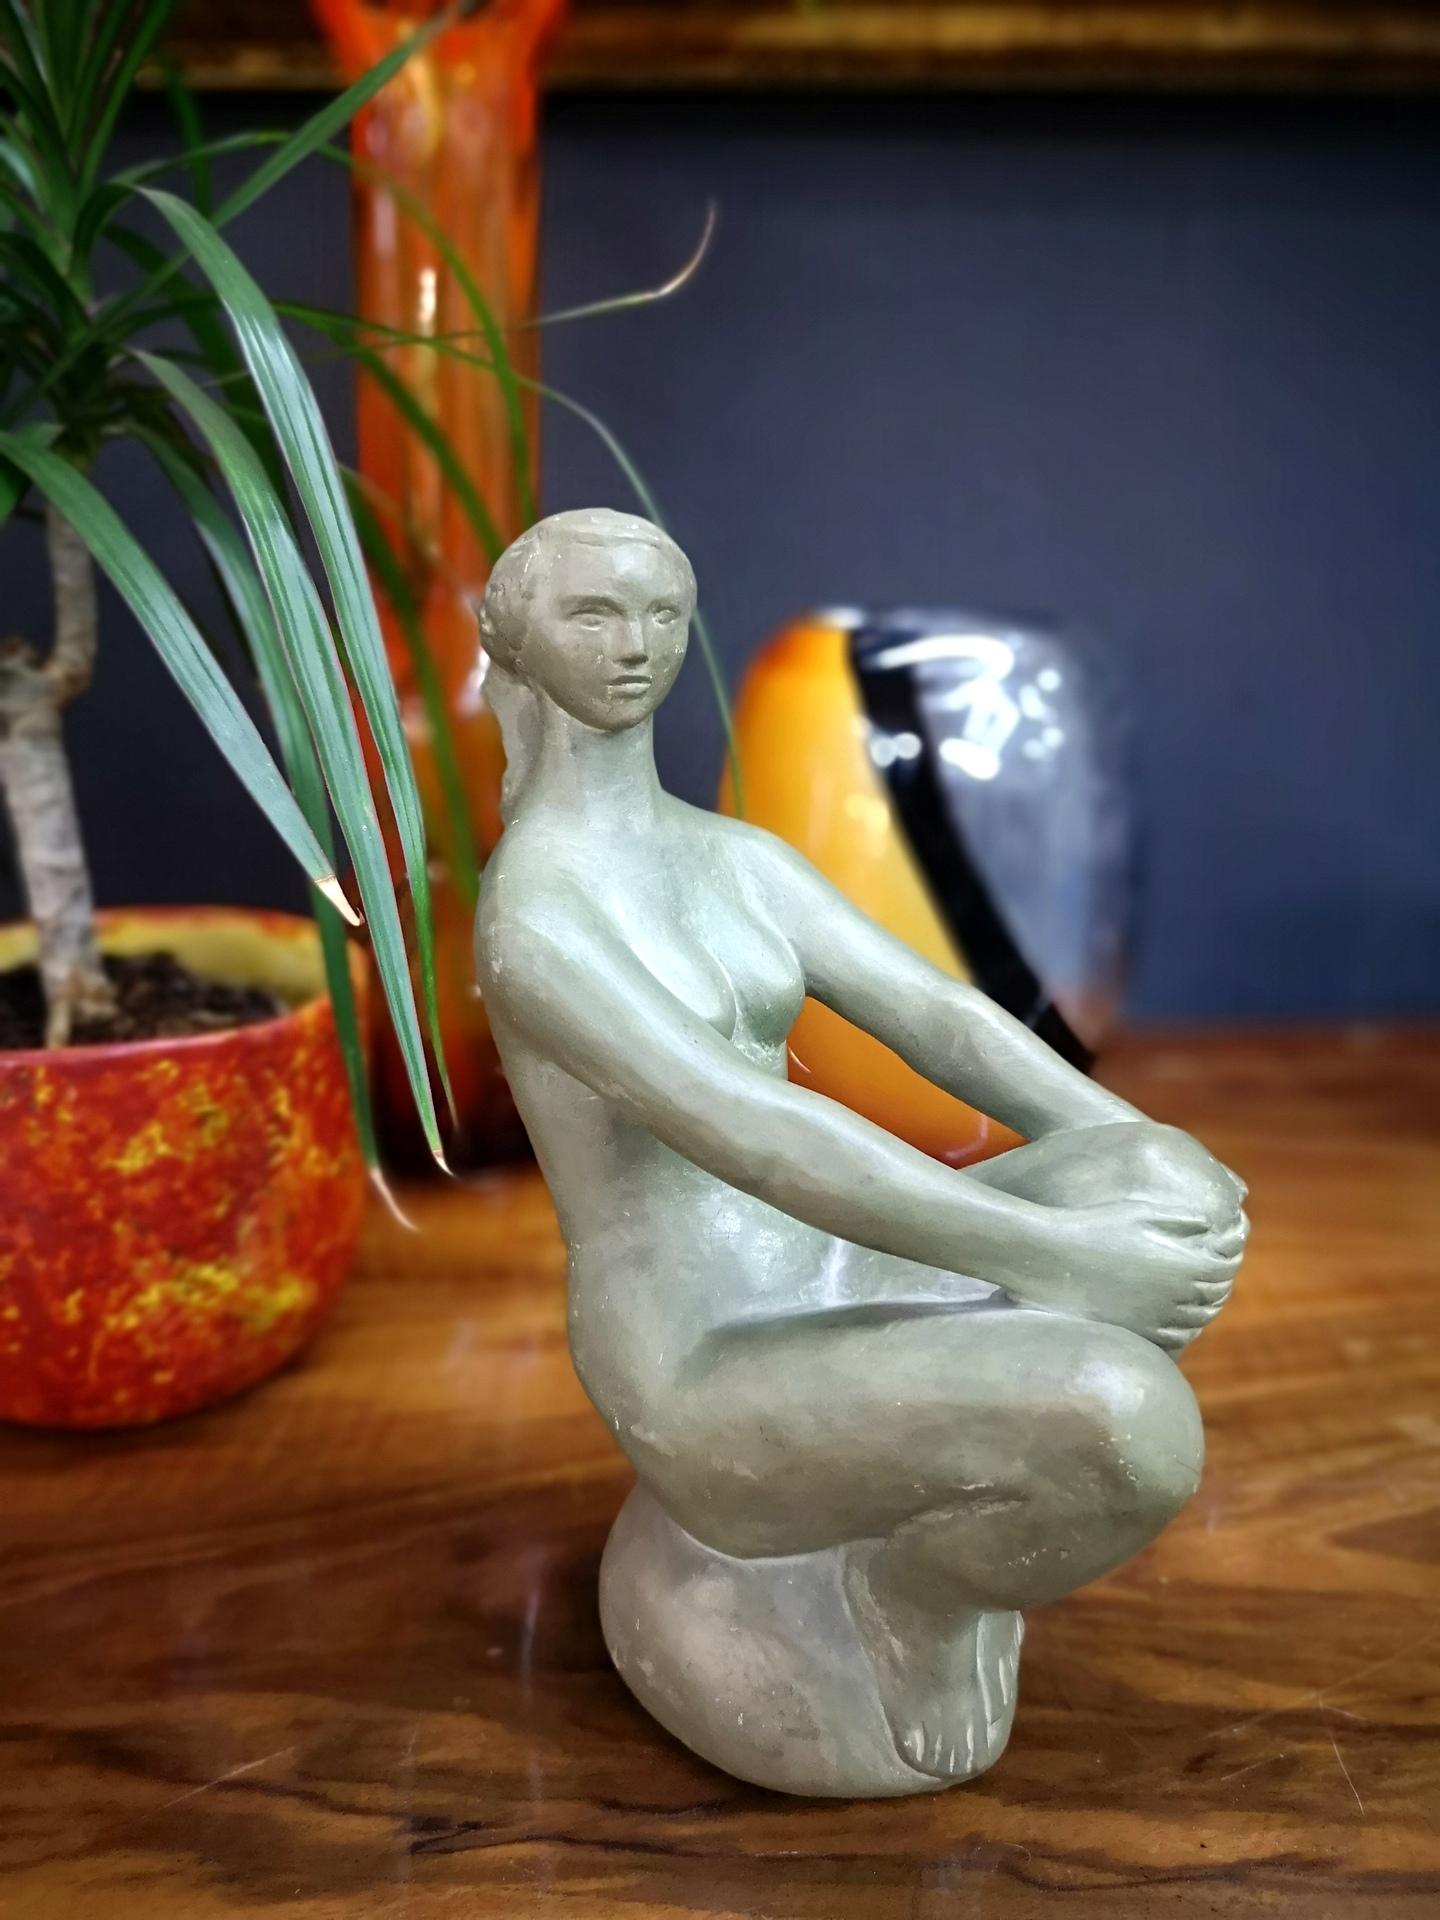 Sitting nude terracota ceramic sculpture by Somogyi, 1960s.